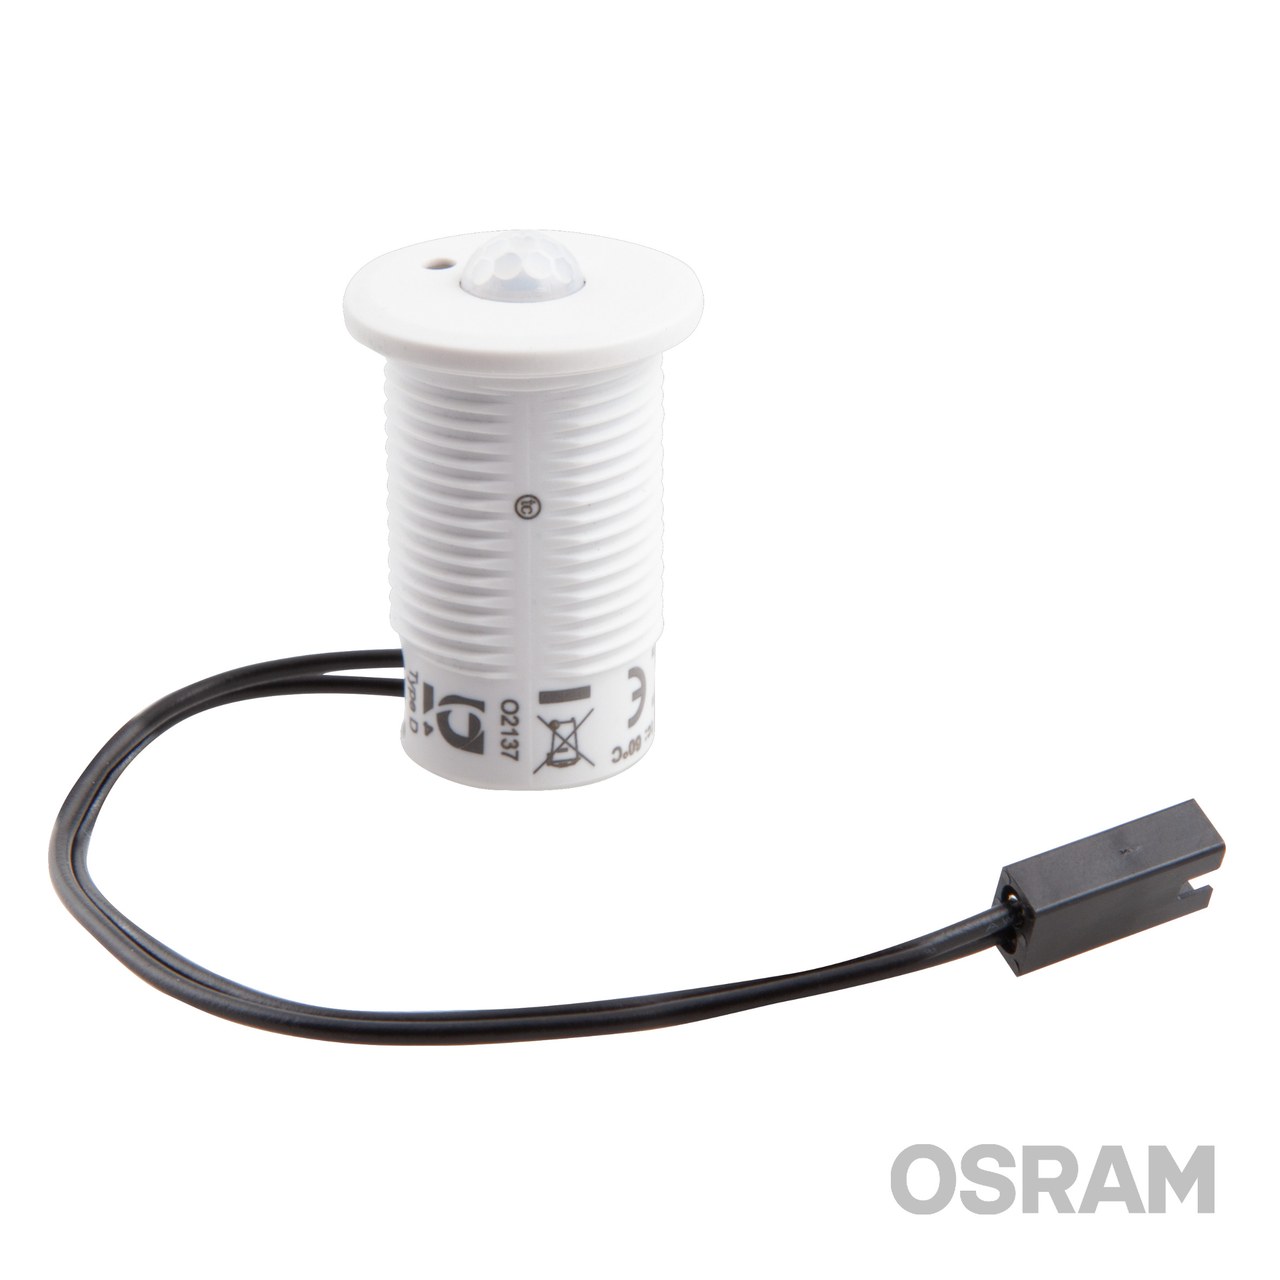 OSRAM product photo.jpg